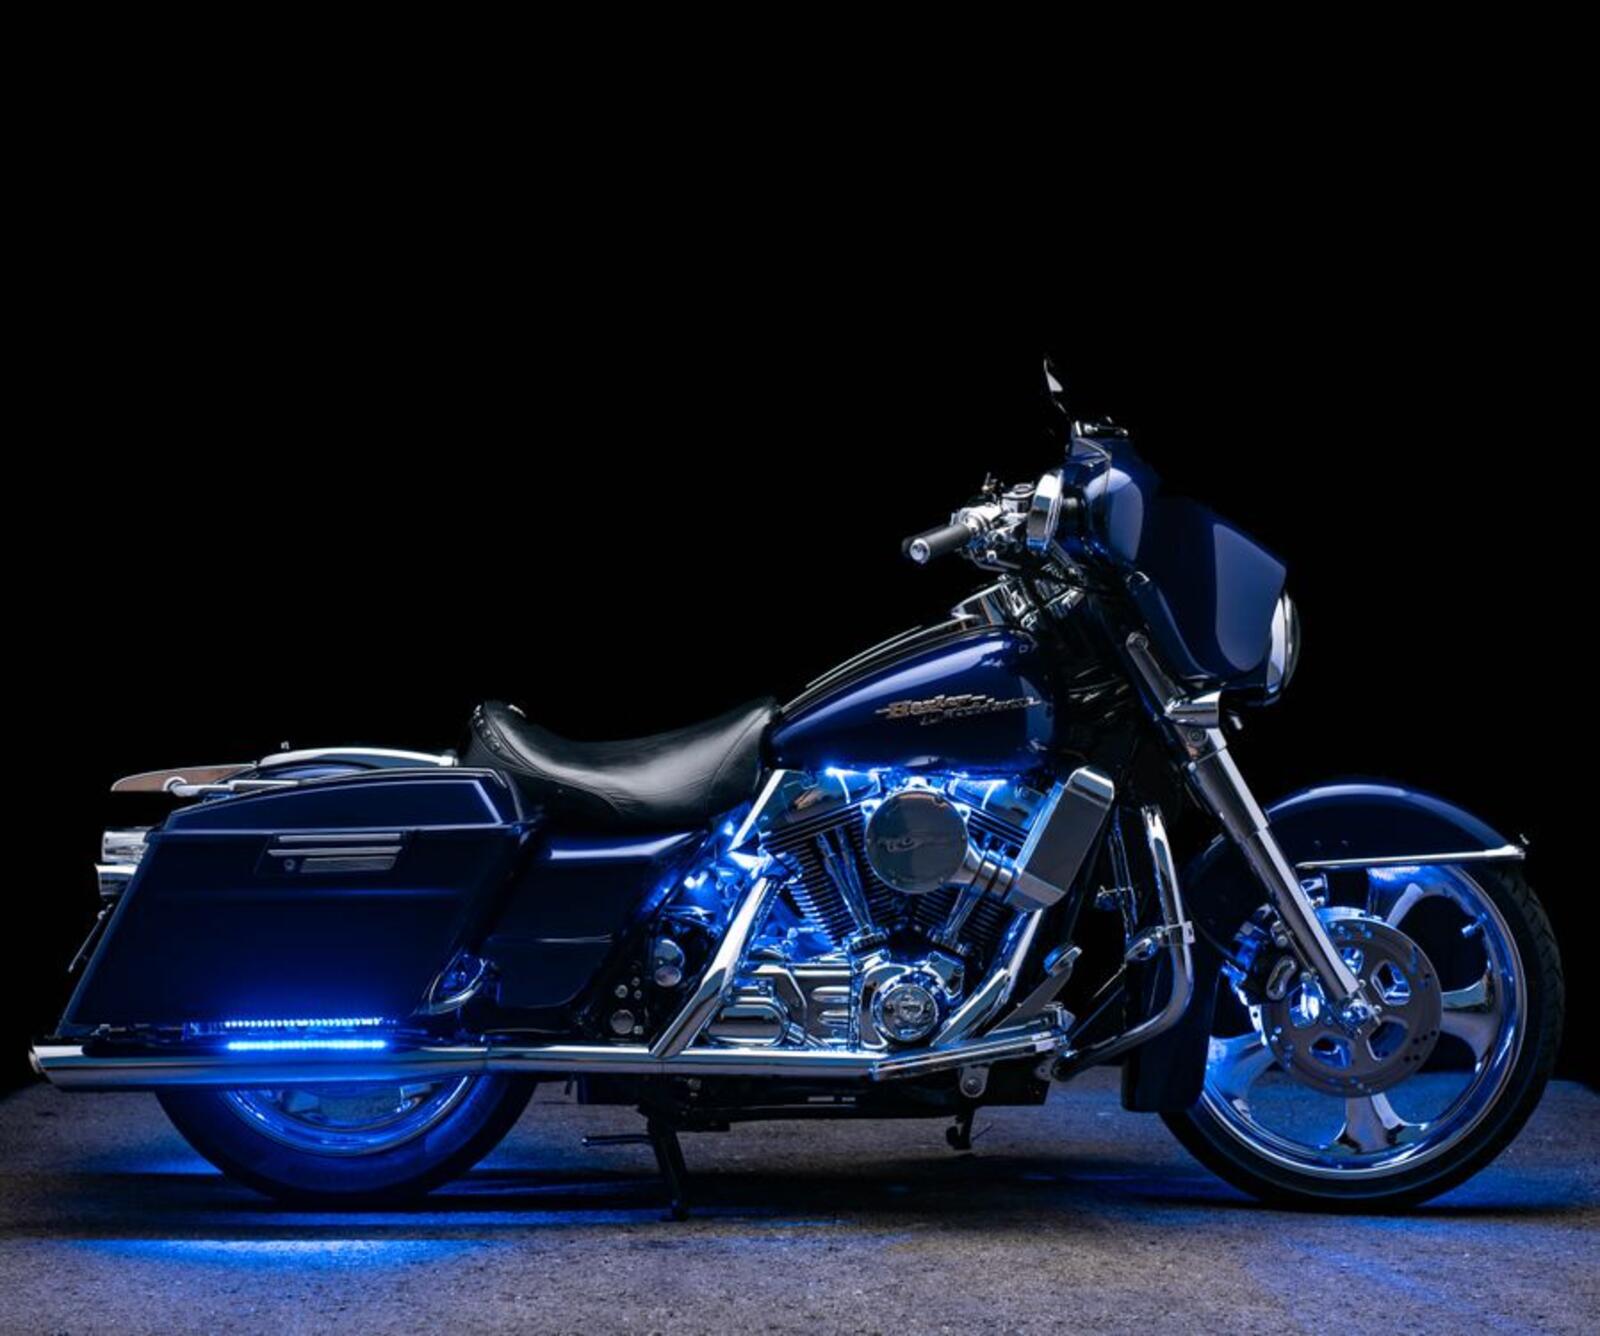 Wallpapers concept motorcycles Harley Davidson black background on the desktop